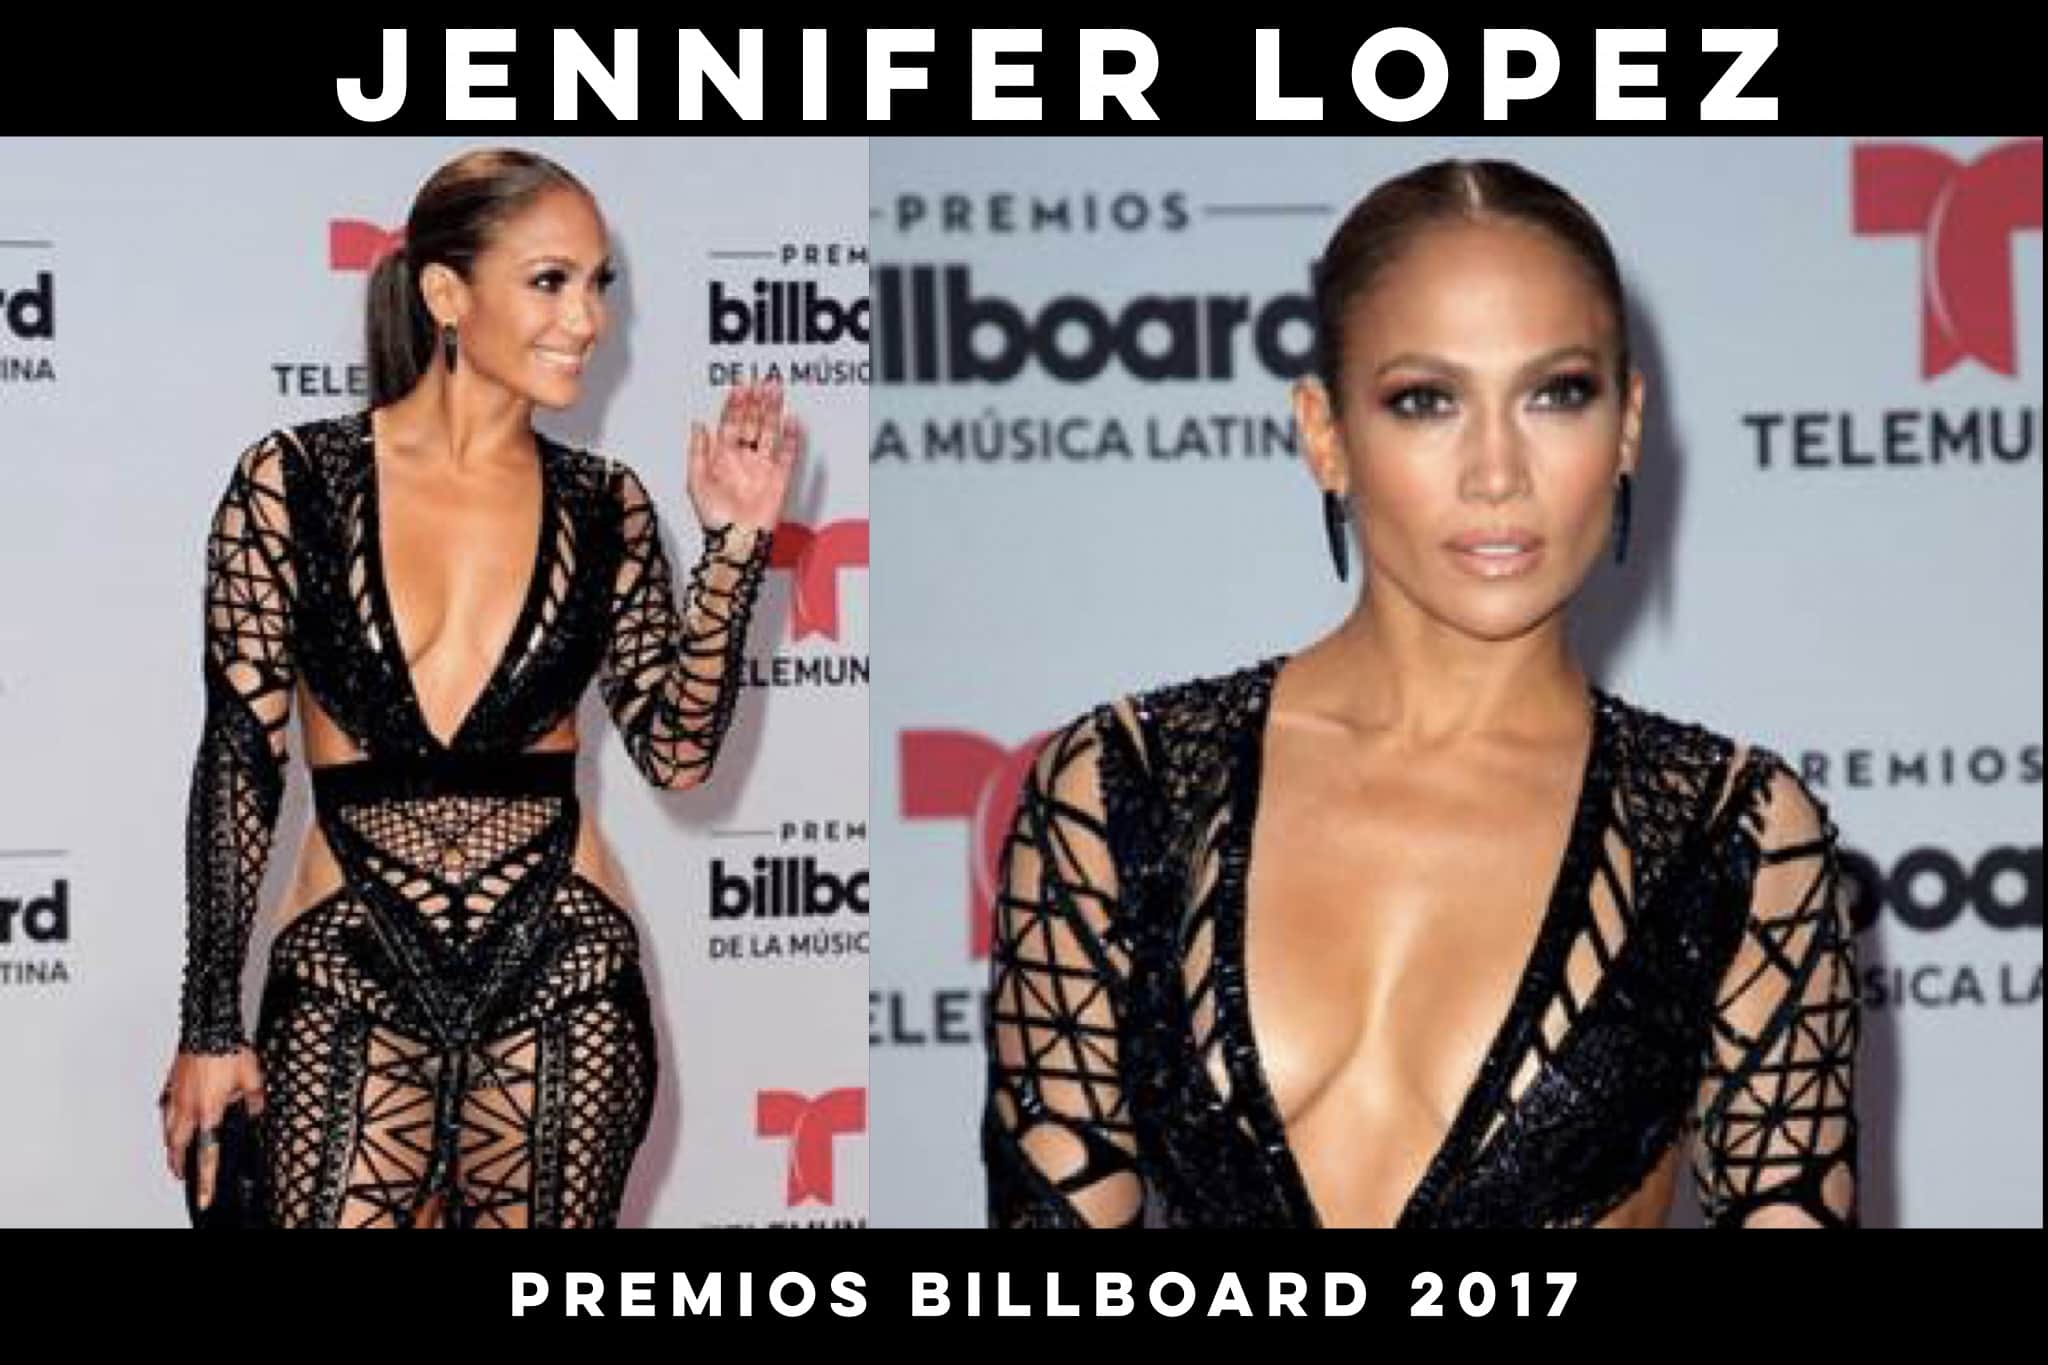 How To Get Jennifer Lopez’s Look From Premios Billboard 2017